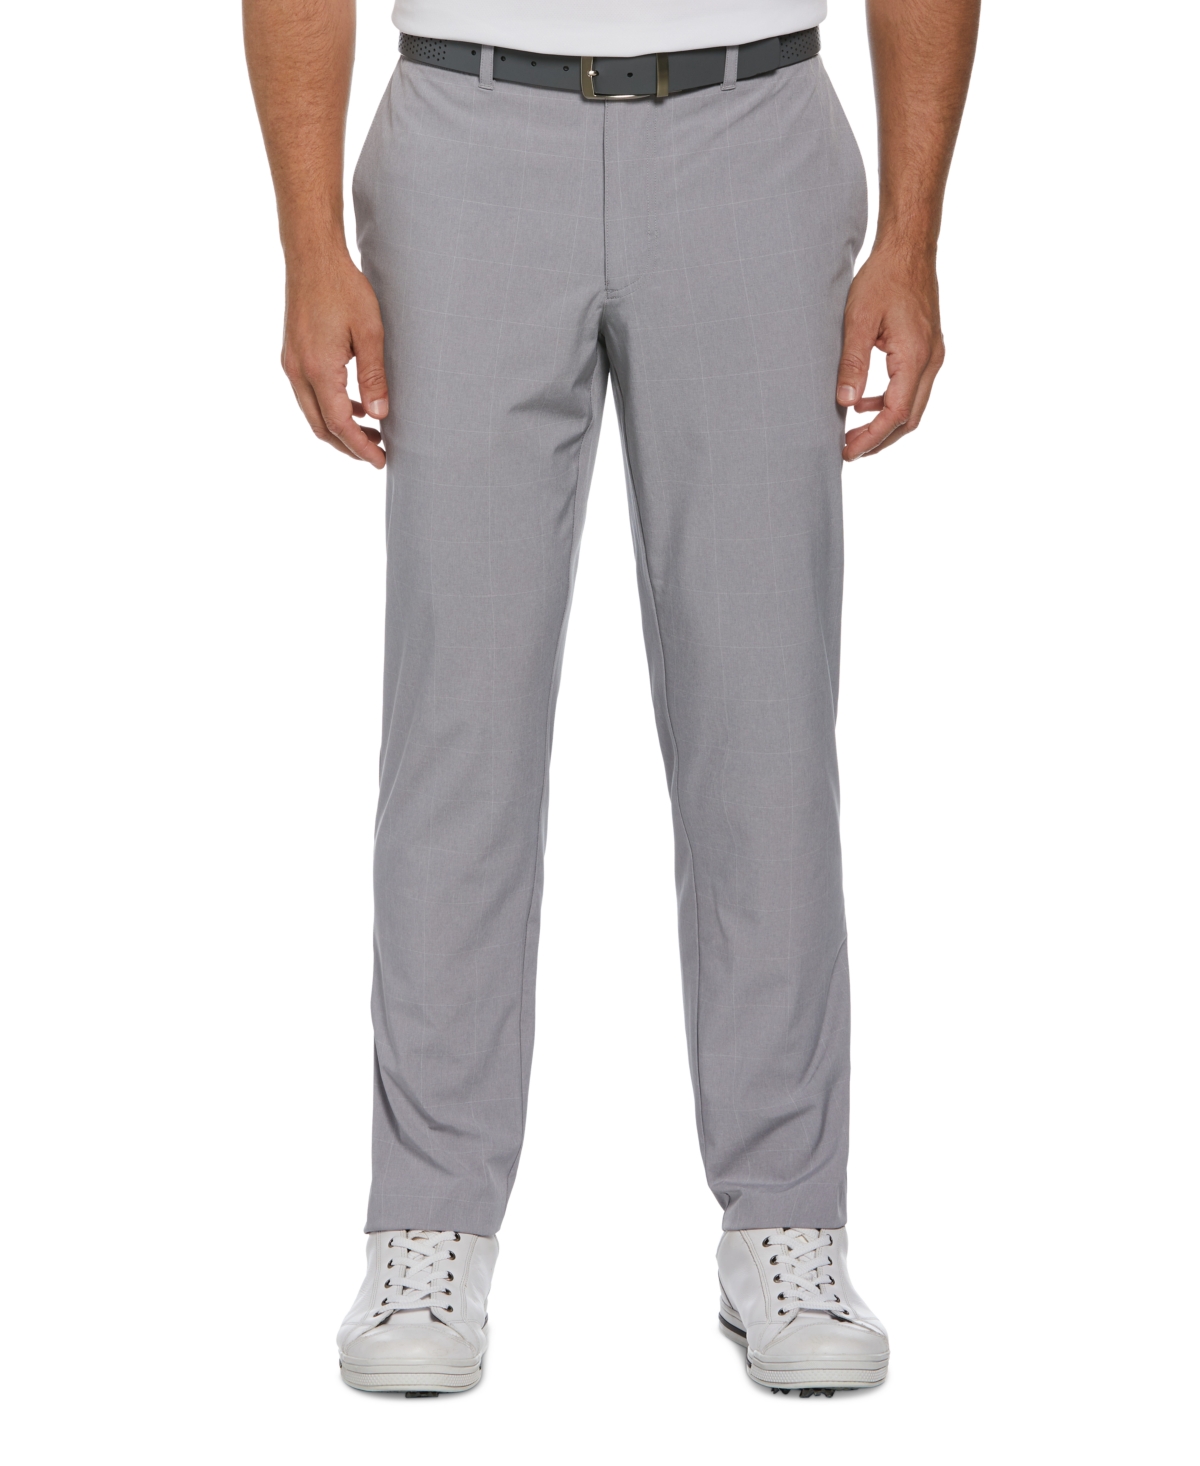 Men's Performance Flat-Front Windowpane Plaid Golf Pants - Light Grey Heather